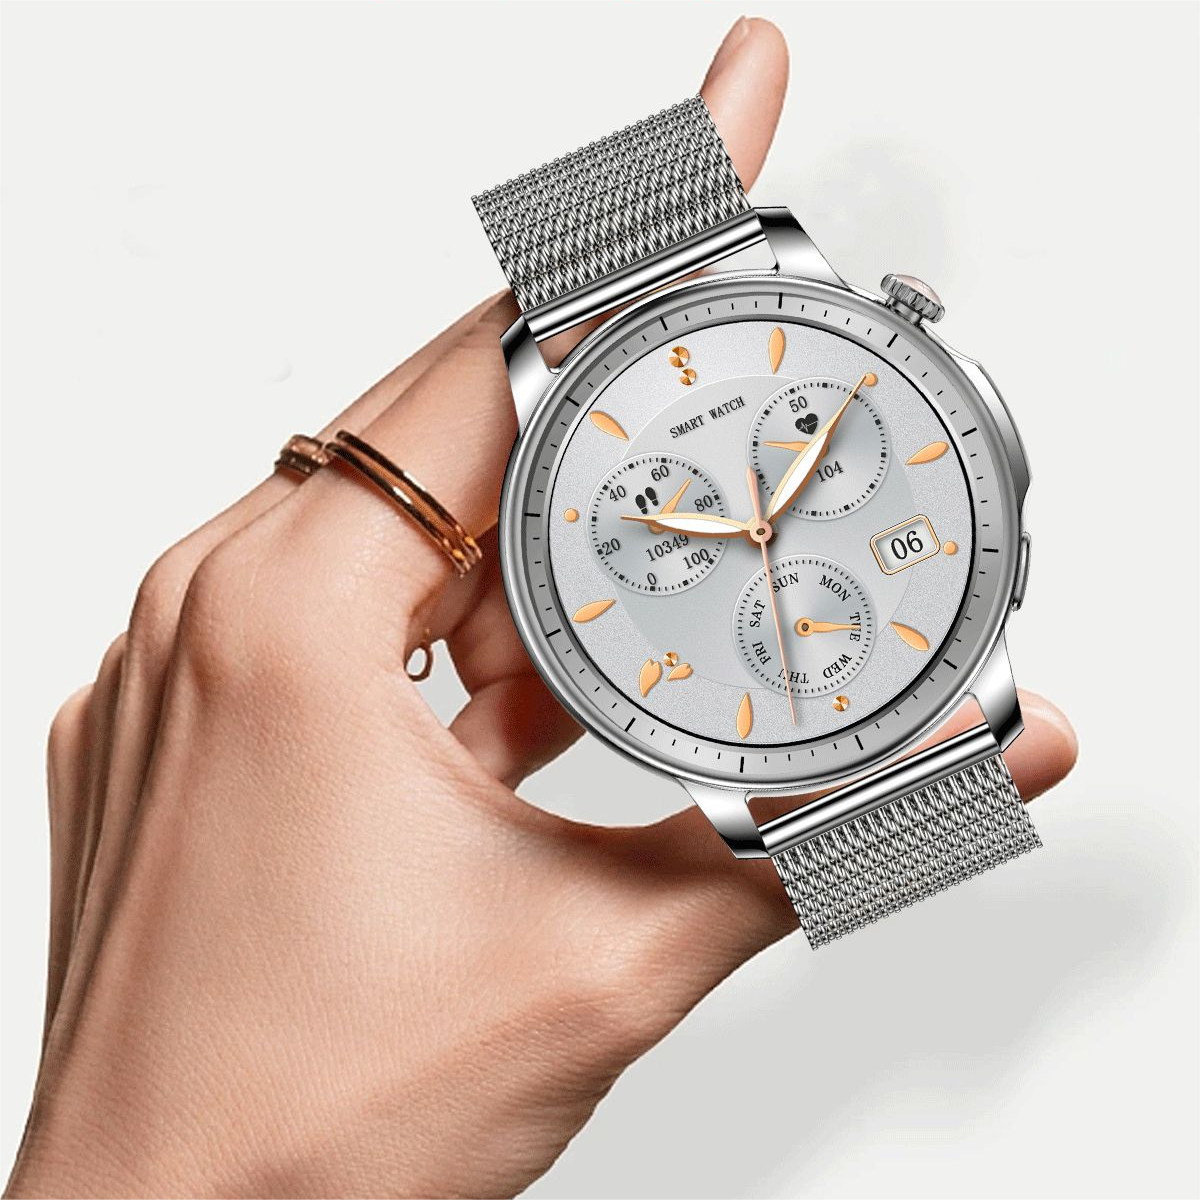 COLMI V65 Smartwatch 1.32" AMOLED Display Fashion Unisex Smart Watch សម្រាប់នារី